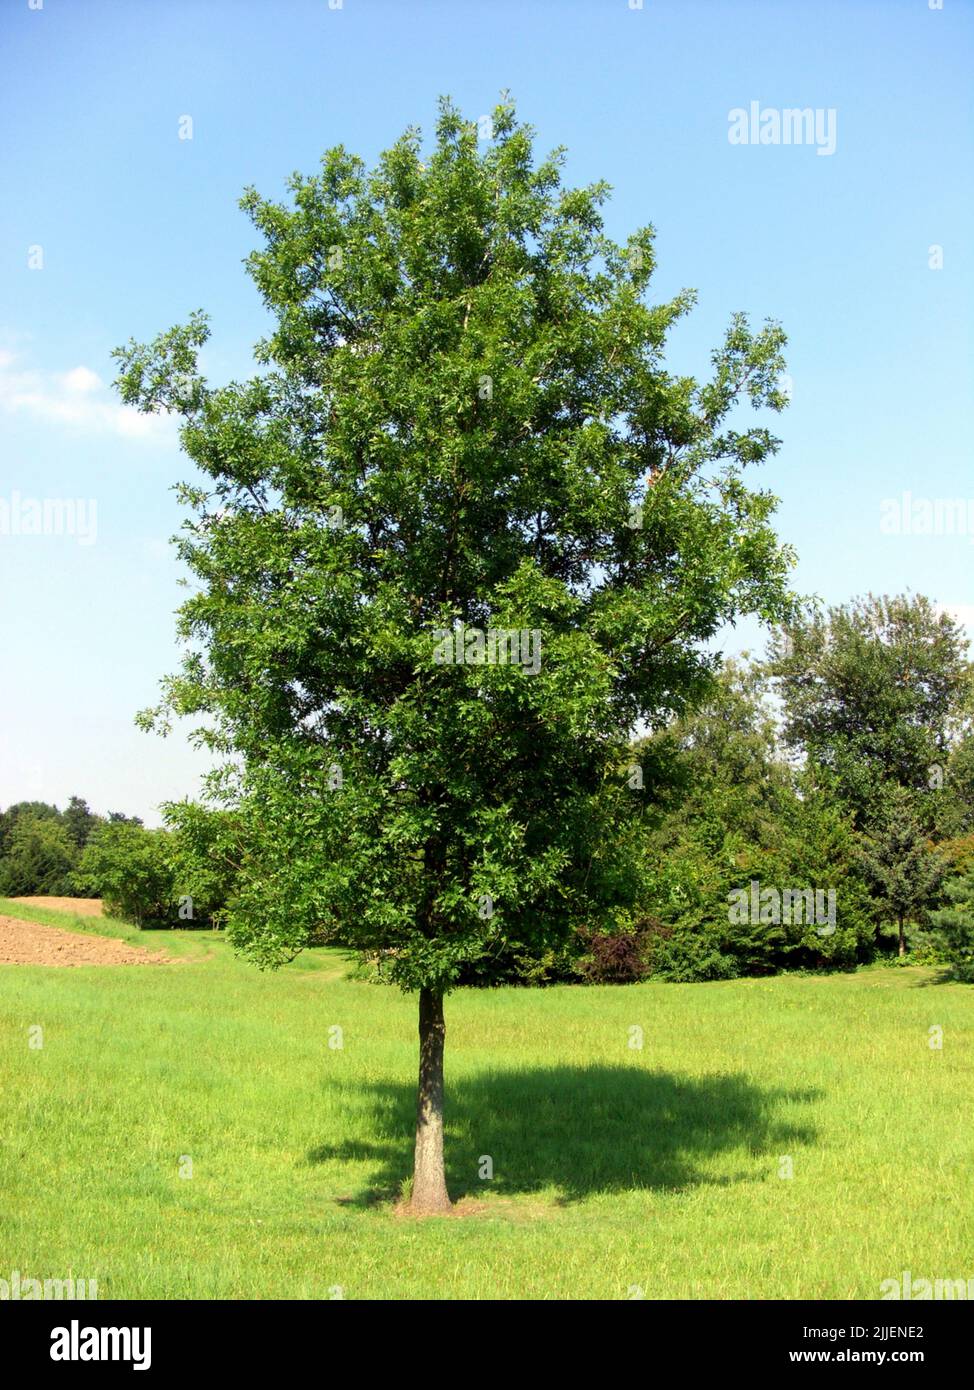 Pin oak, Swamp Spanish oak (Quercus palustris), single tree in a park, Germany Stock Photo